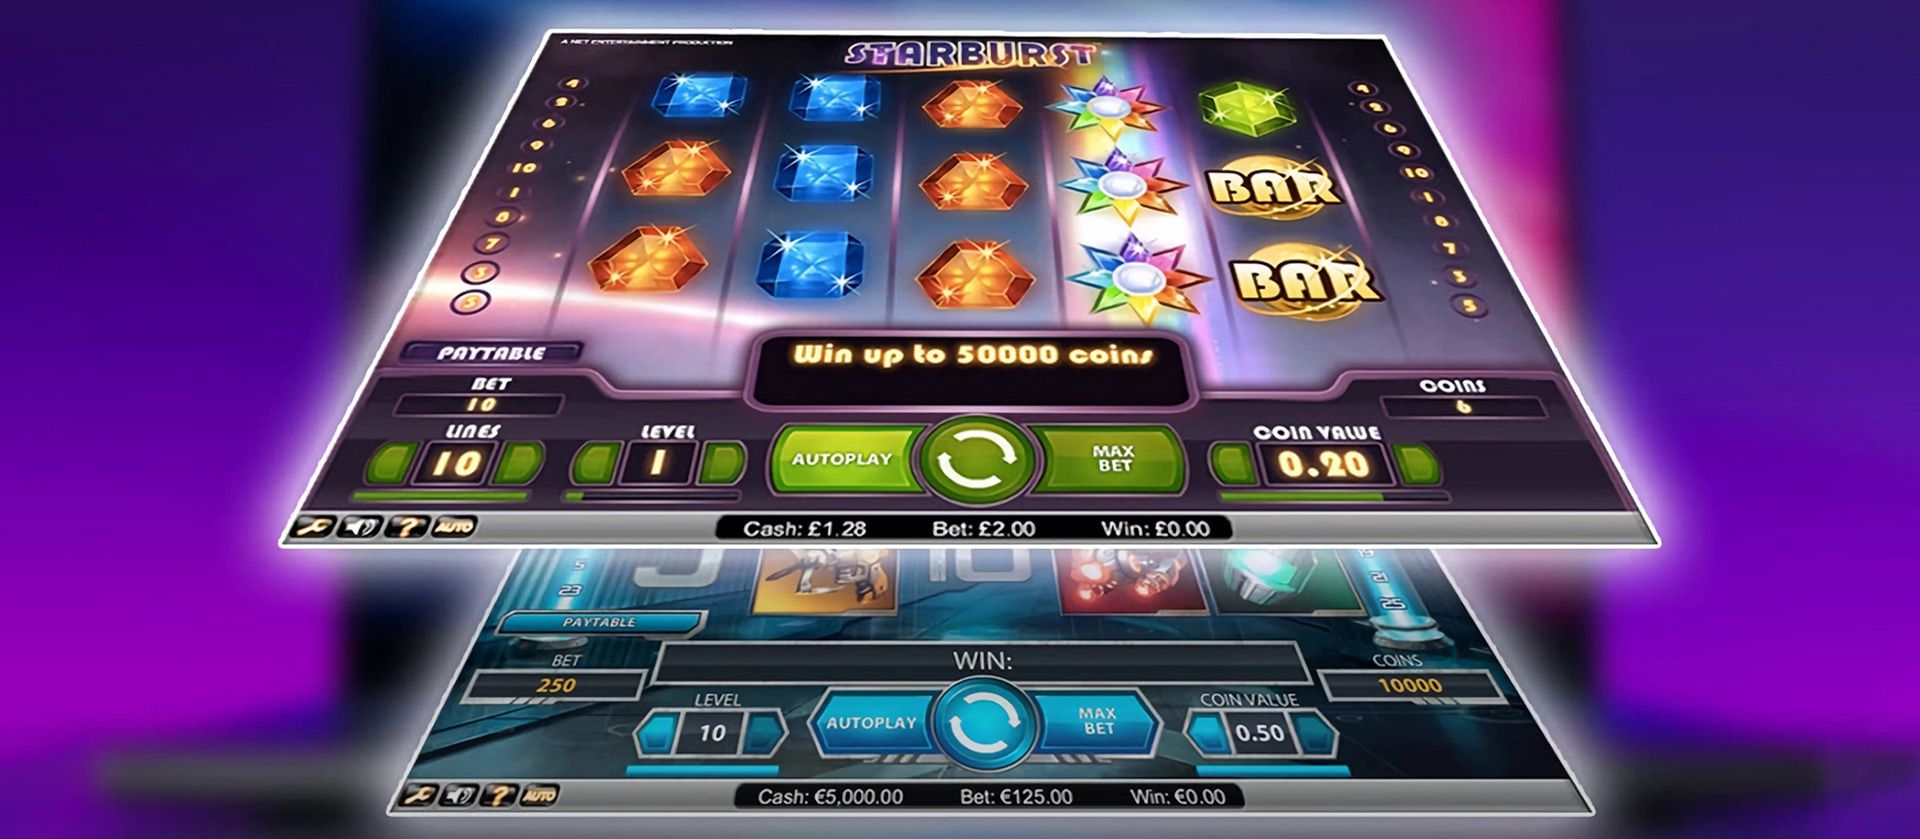 Real money slots in high roller casinos.